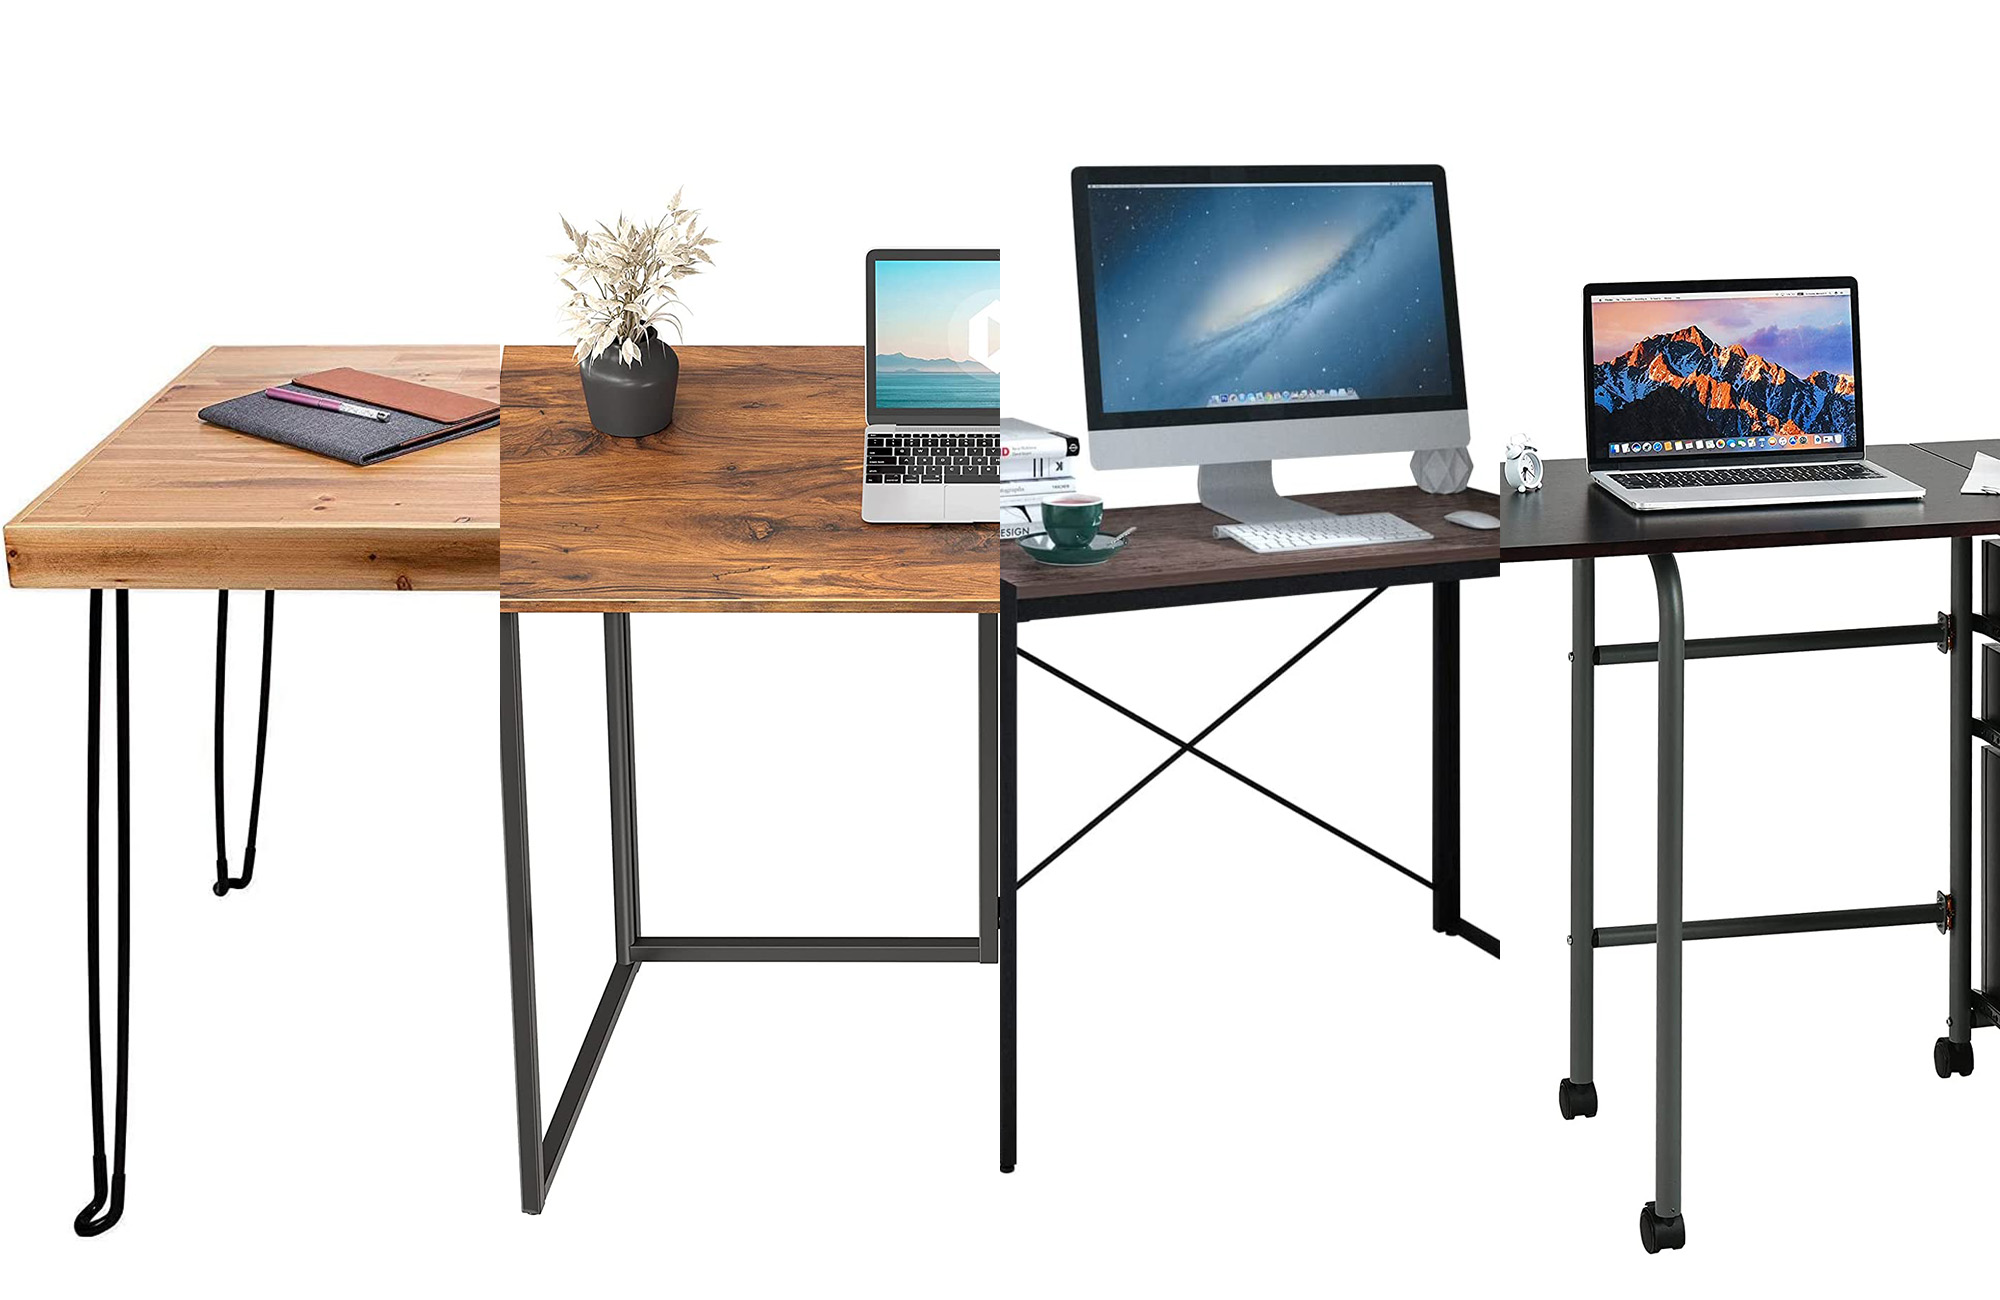 https://www.popsci.com/uploads/2021/07/01/best-folding-desks-header.jpg?auto=webp&width=1440&height=936